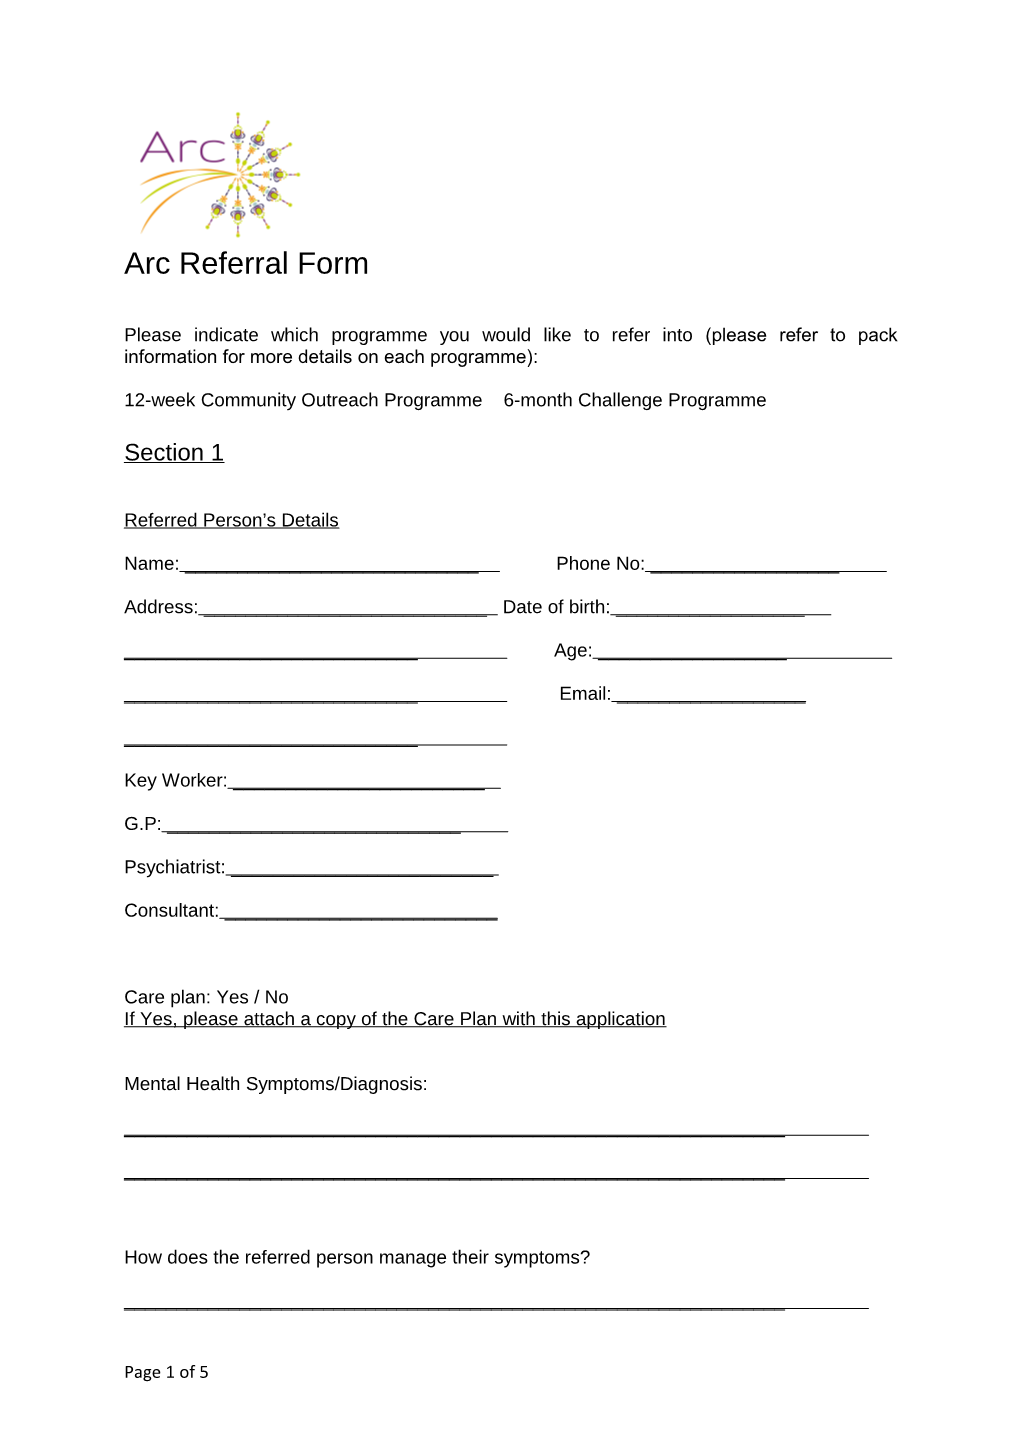 Arc Application Form